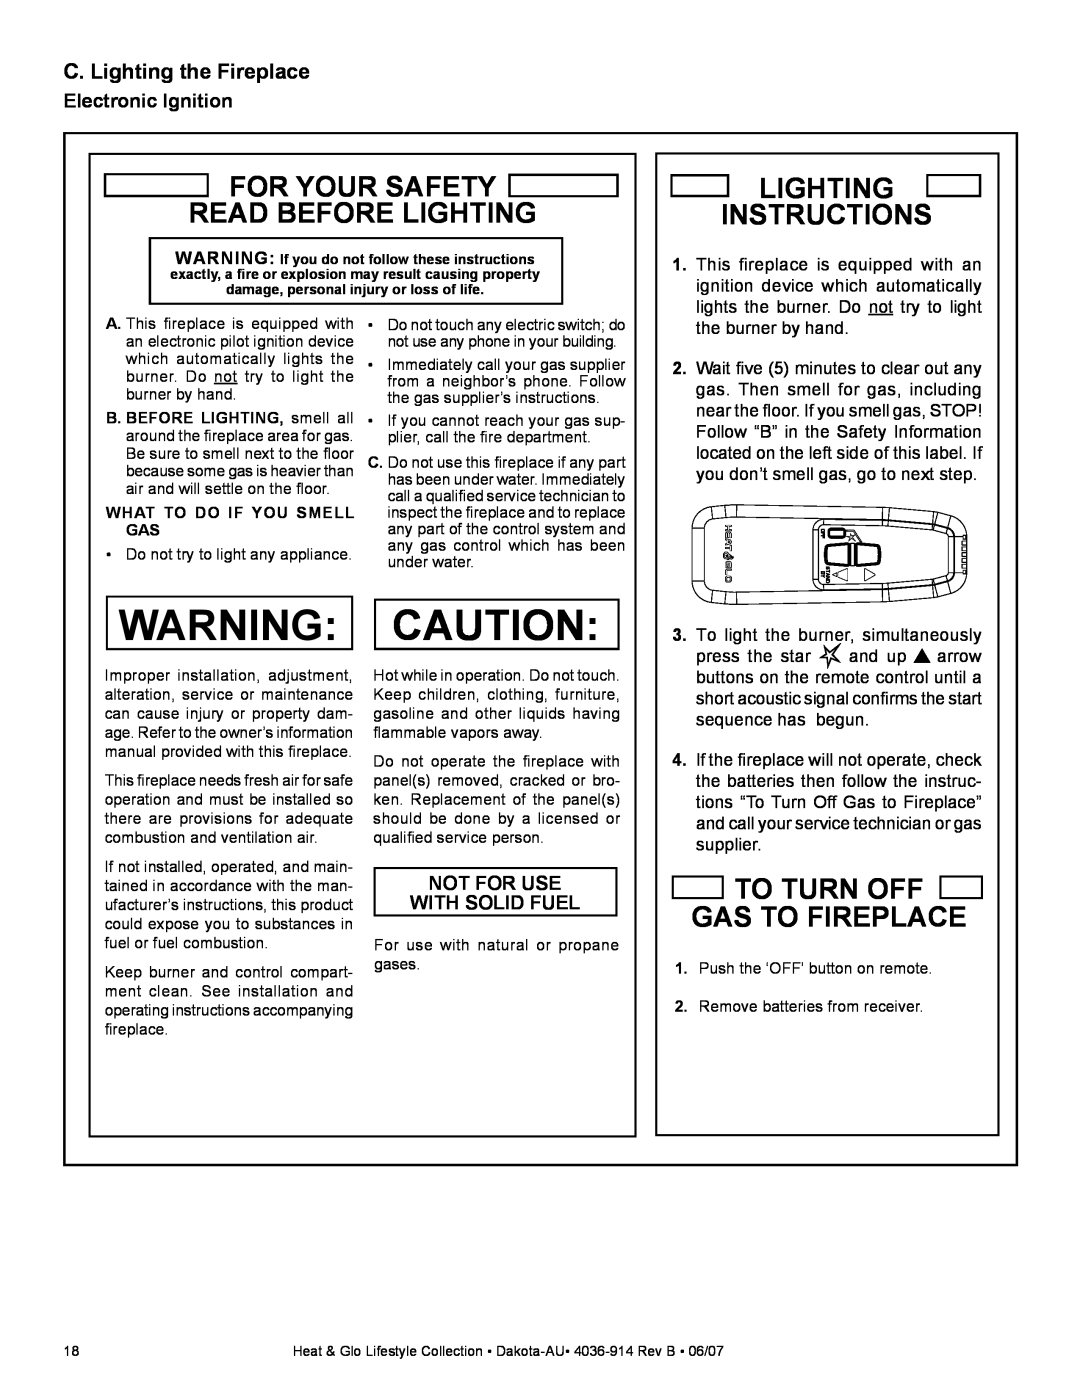 Heat & Glo LifeStyle DAKOTA-AU manual Warning Caution, For Your Safety Read Before Lighting, Lighting Instructions 